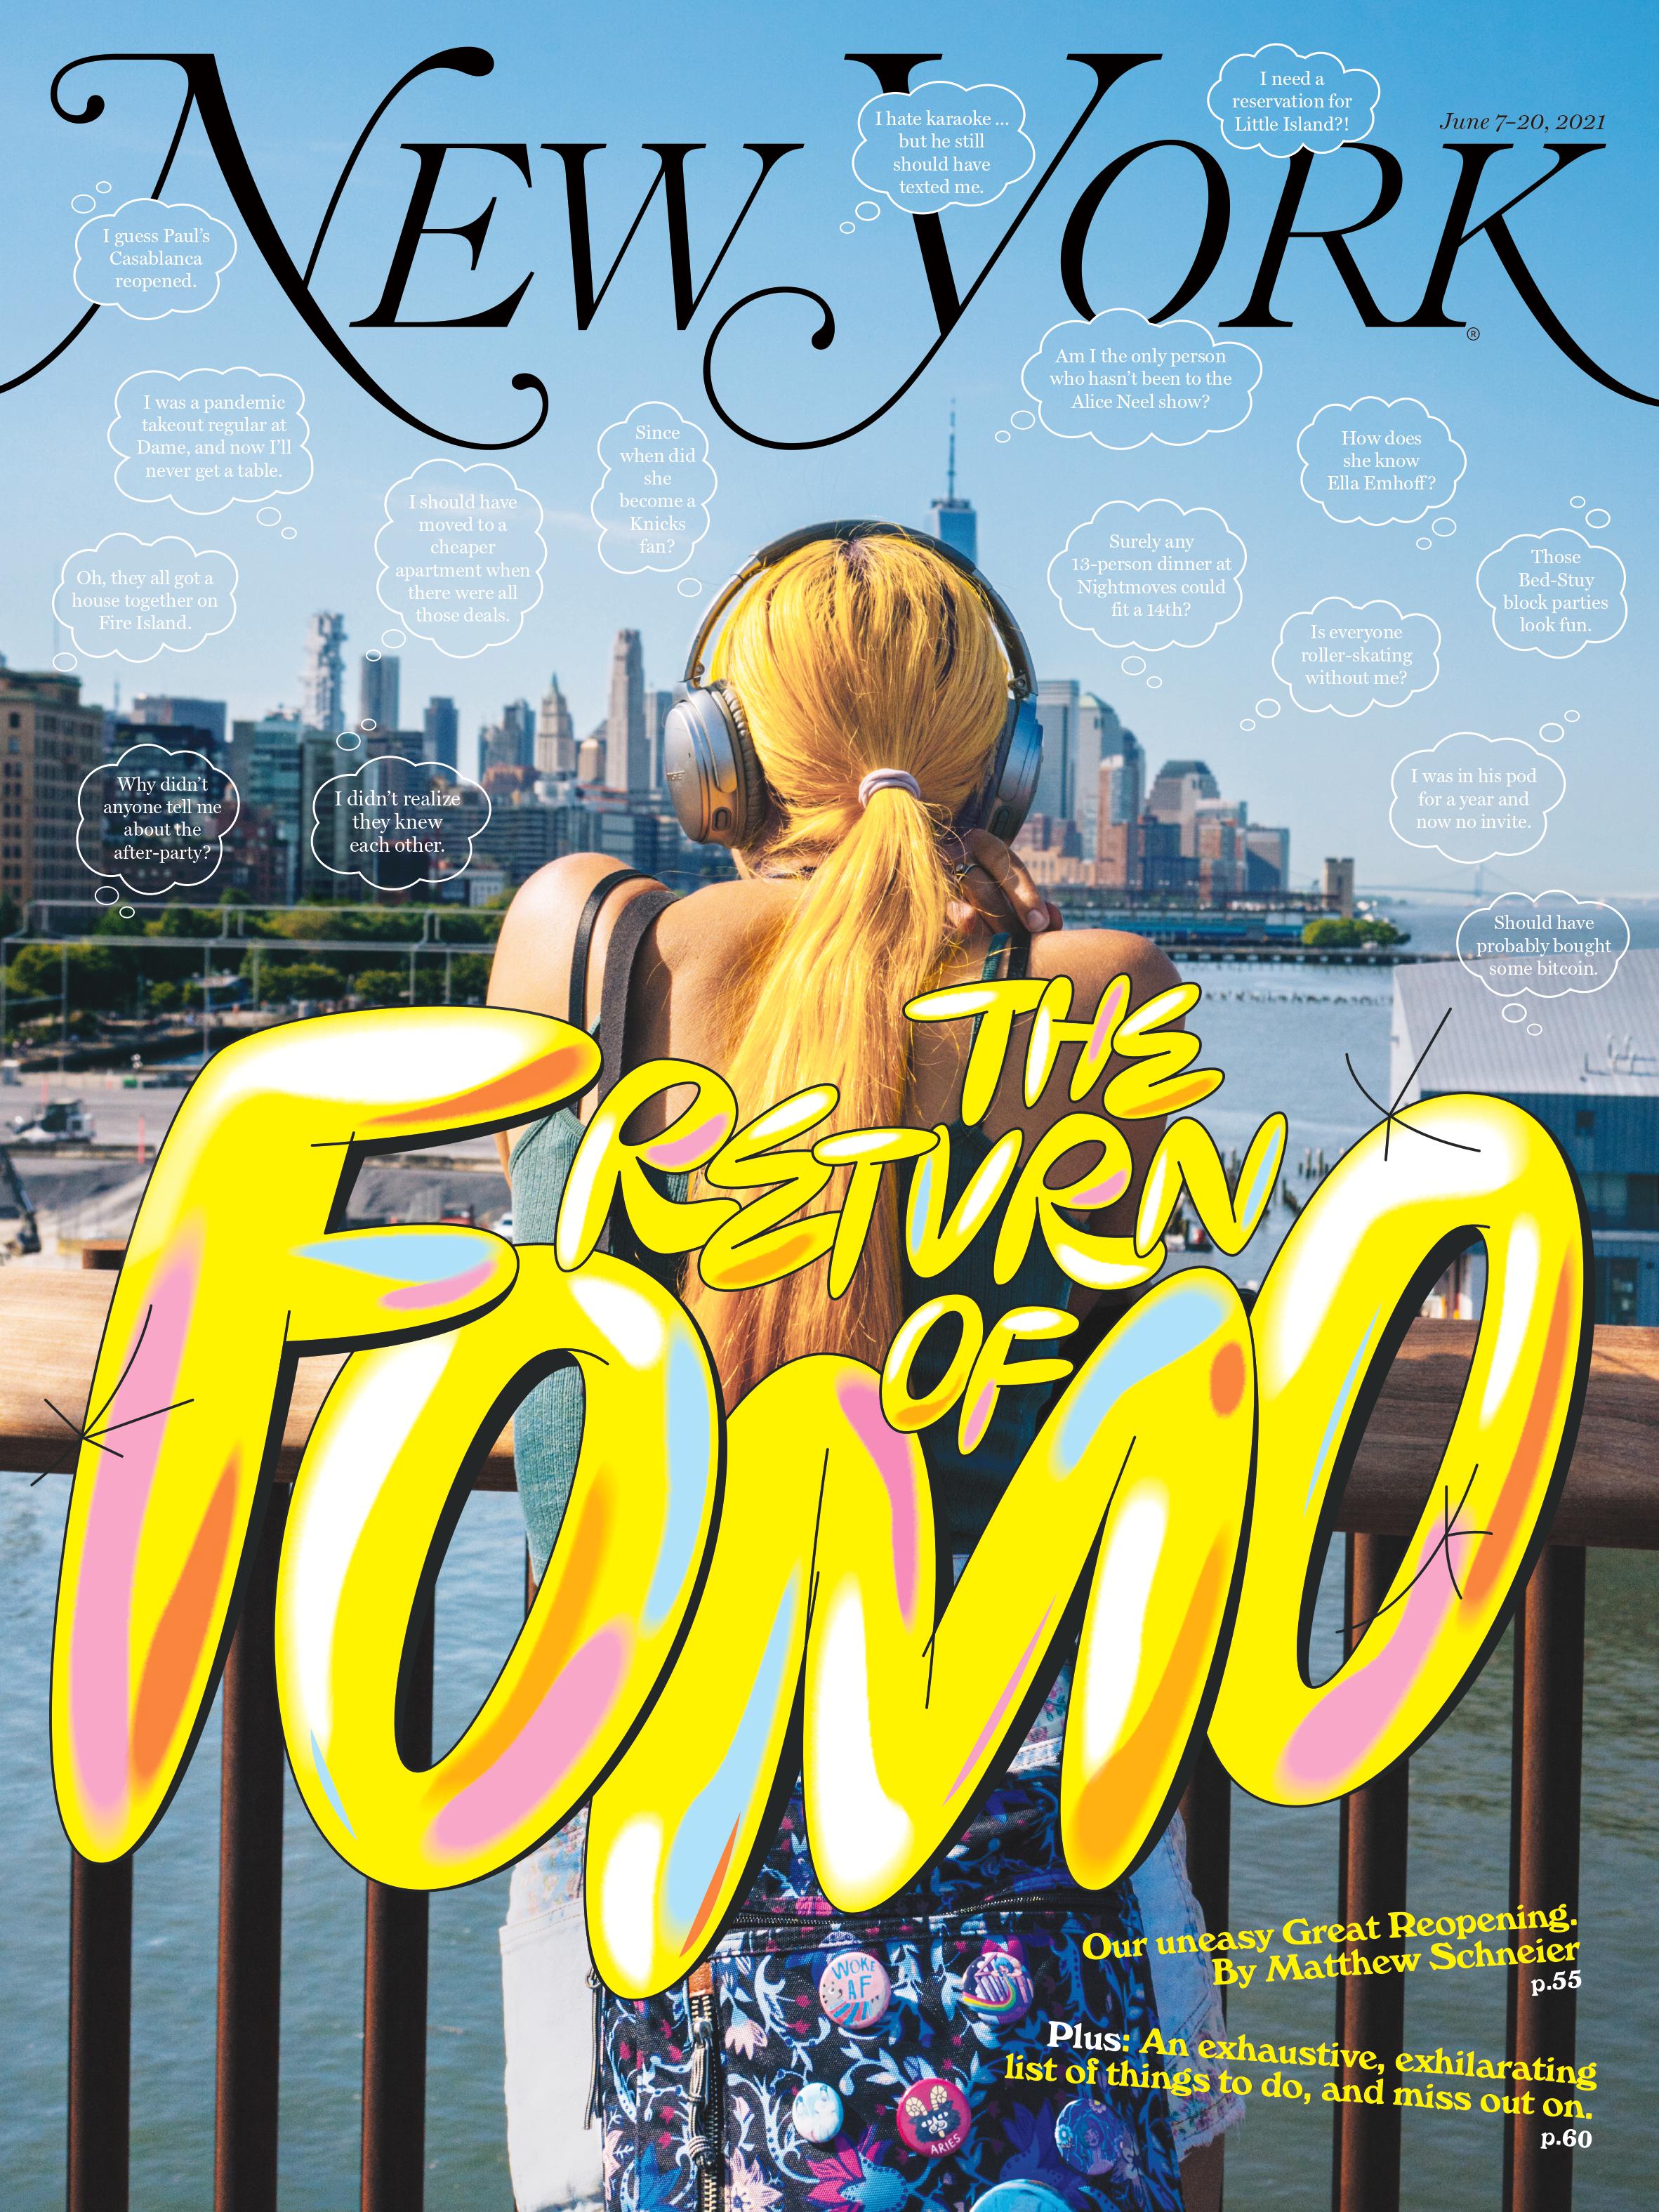 New York - "The Return of FOMO," June 7-20, 2021